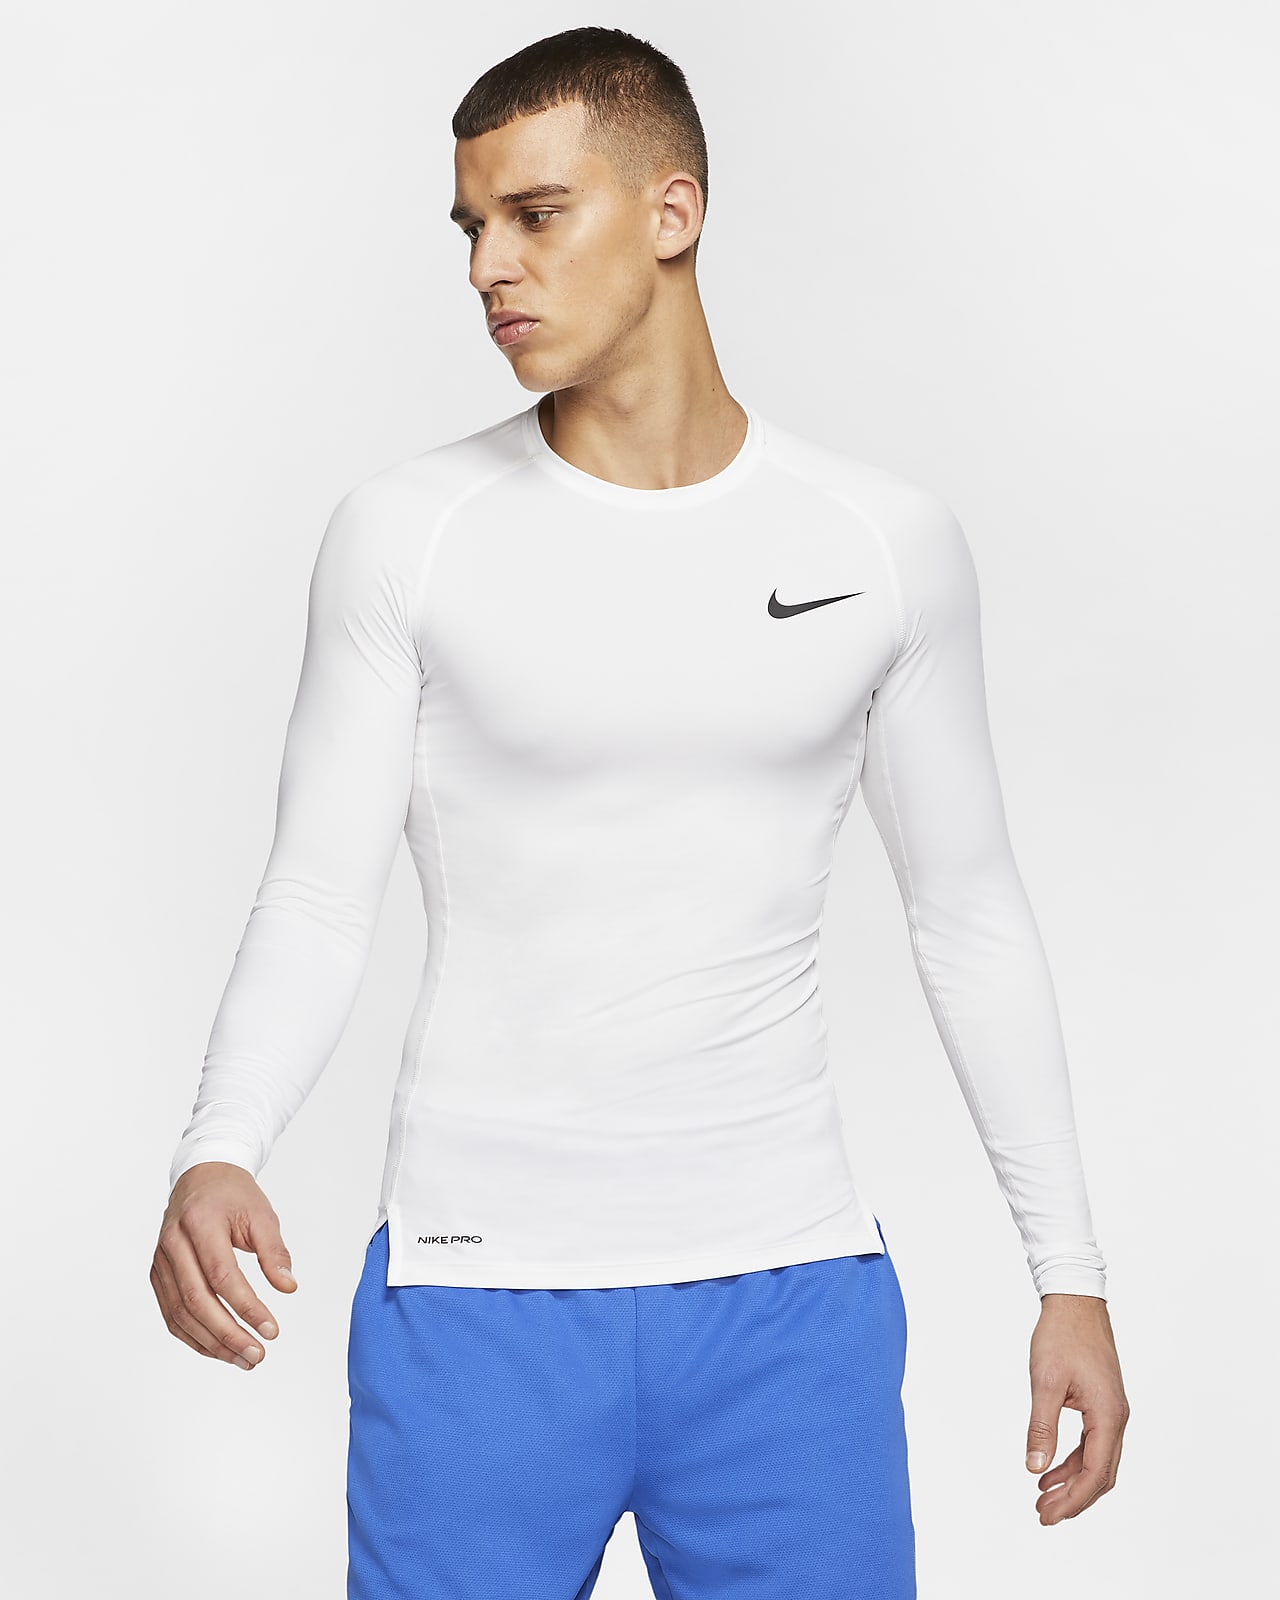 Nike Pro Men's Tight Fit Long-Sleeve 